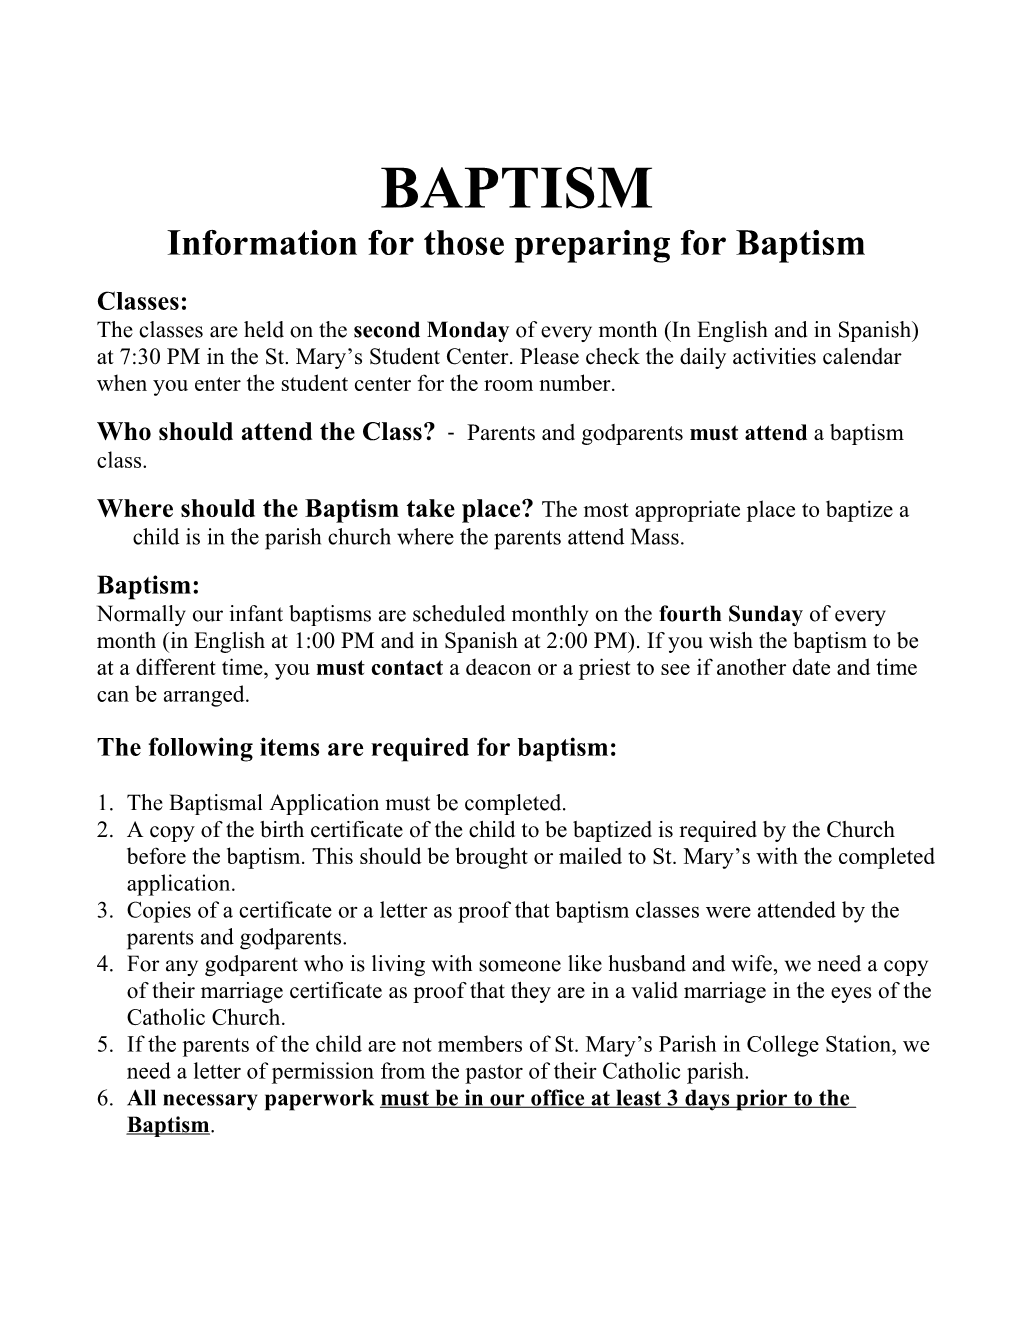 Information for Those Preparing for Baptism